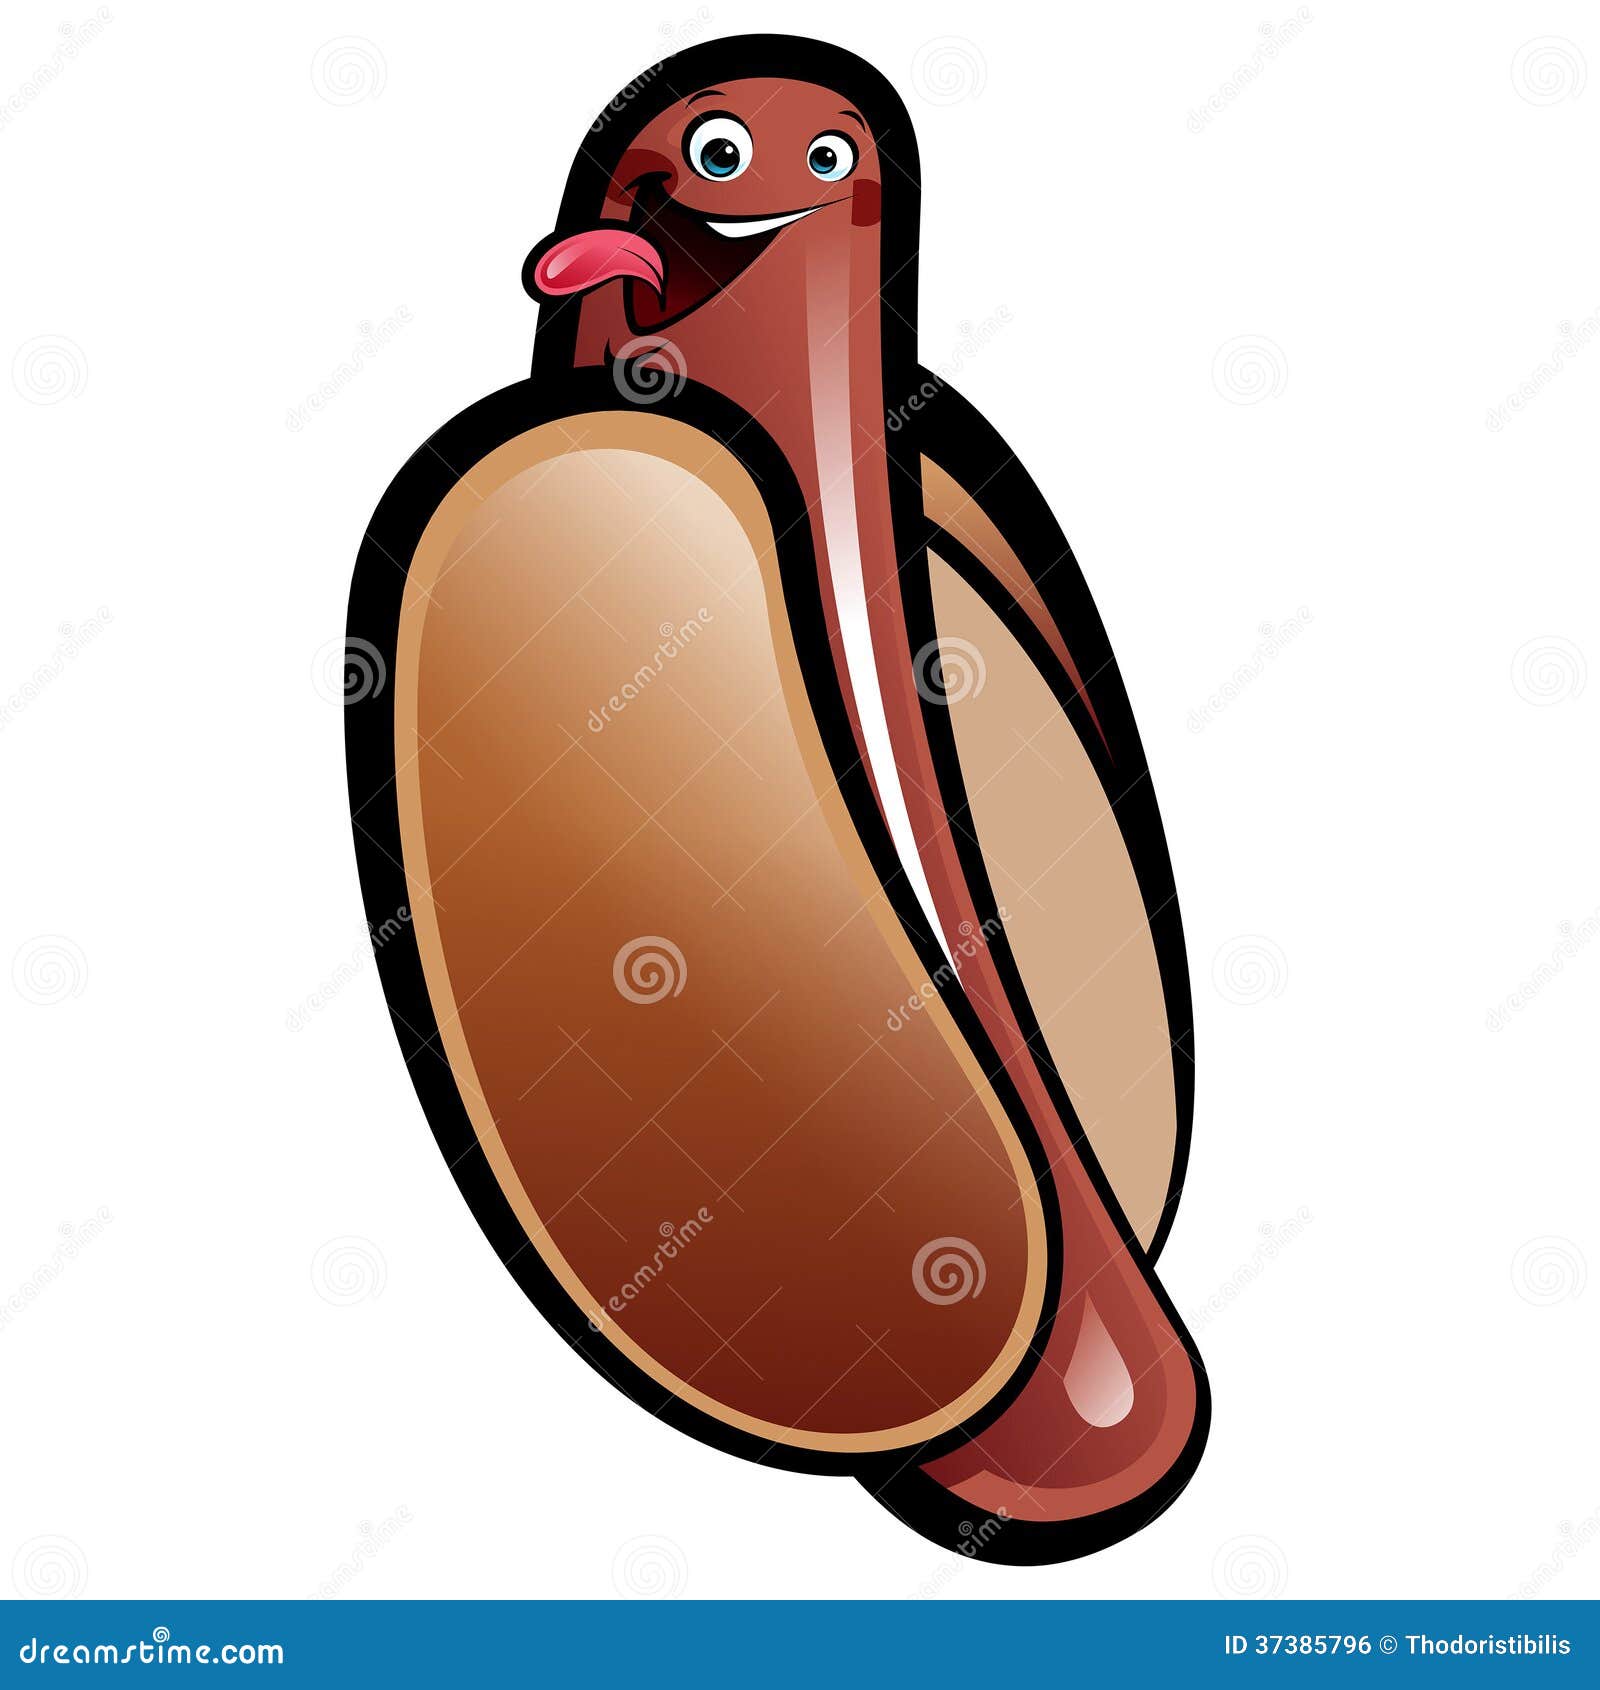 smiling cartoon hot dog frank character in bun